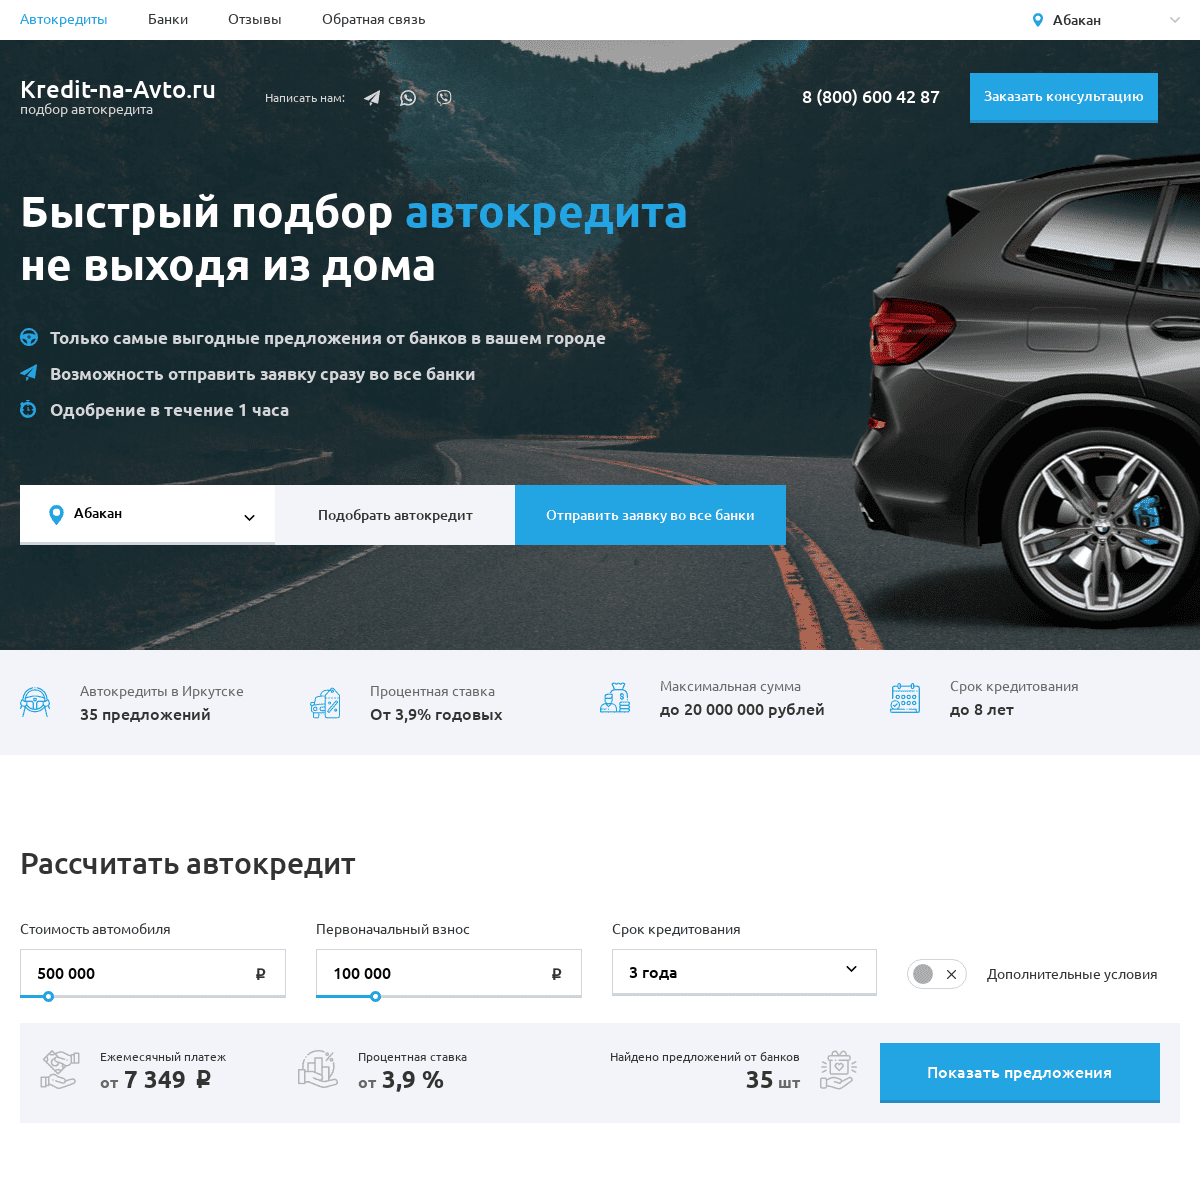 A complete backup of https://kredit-na-avto.ru